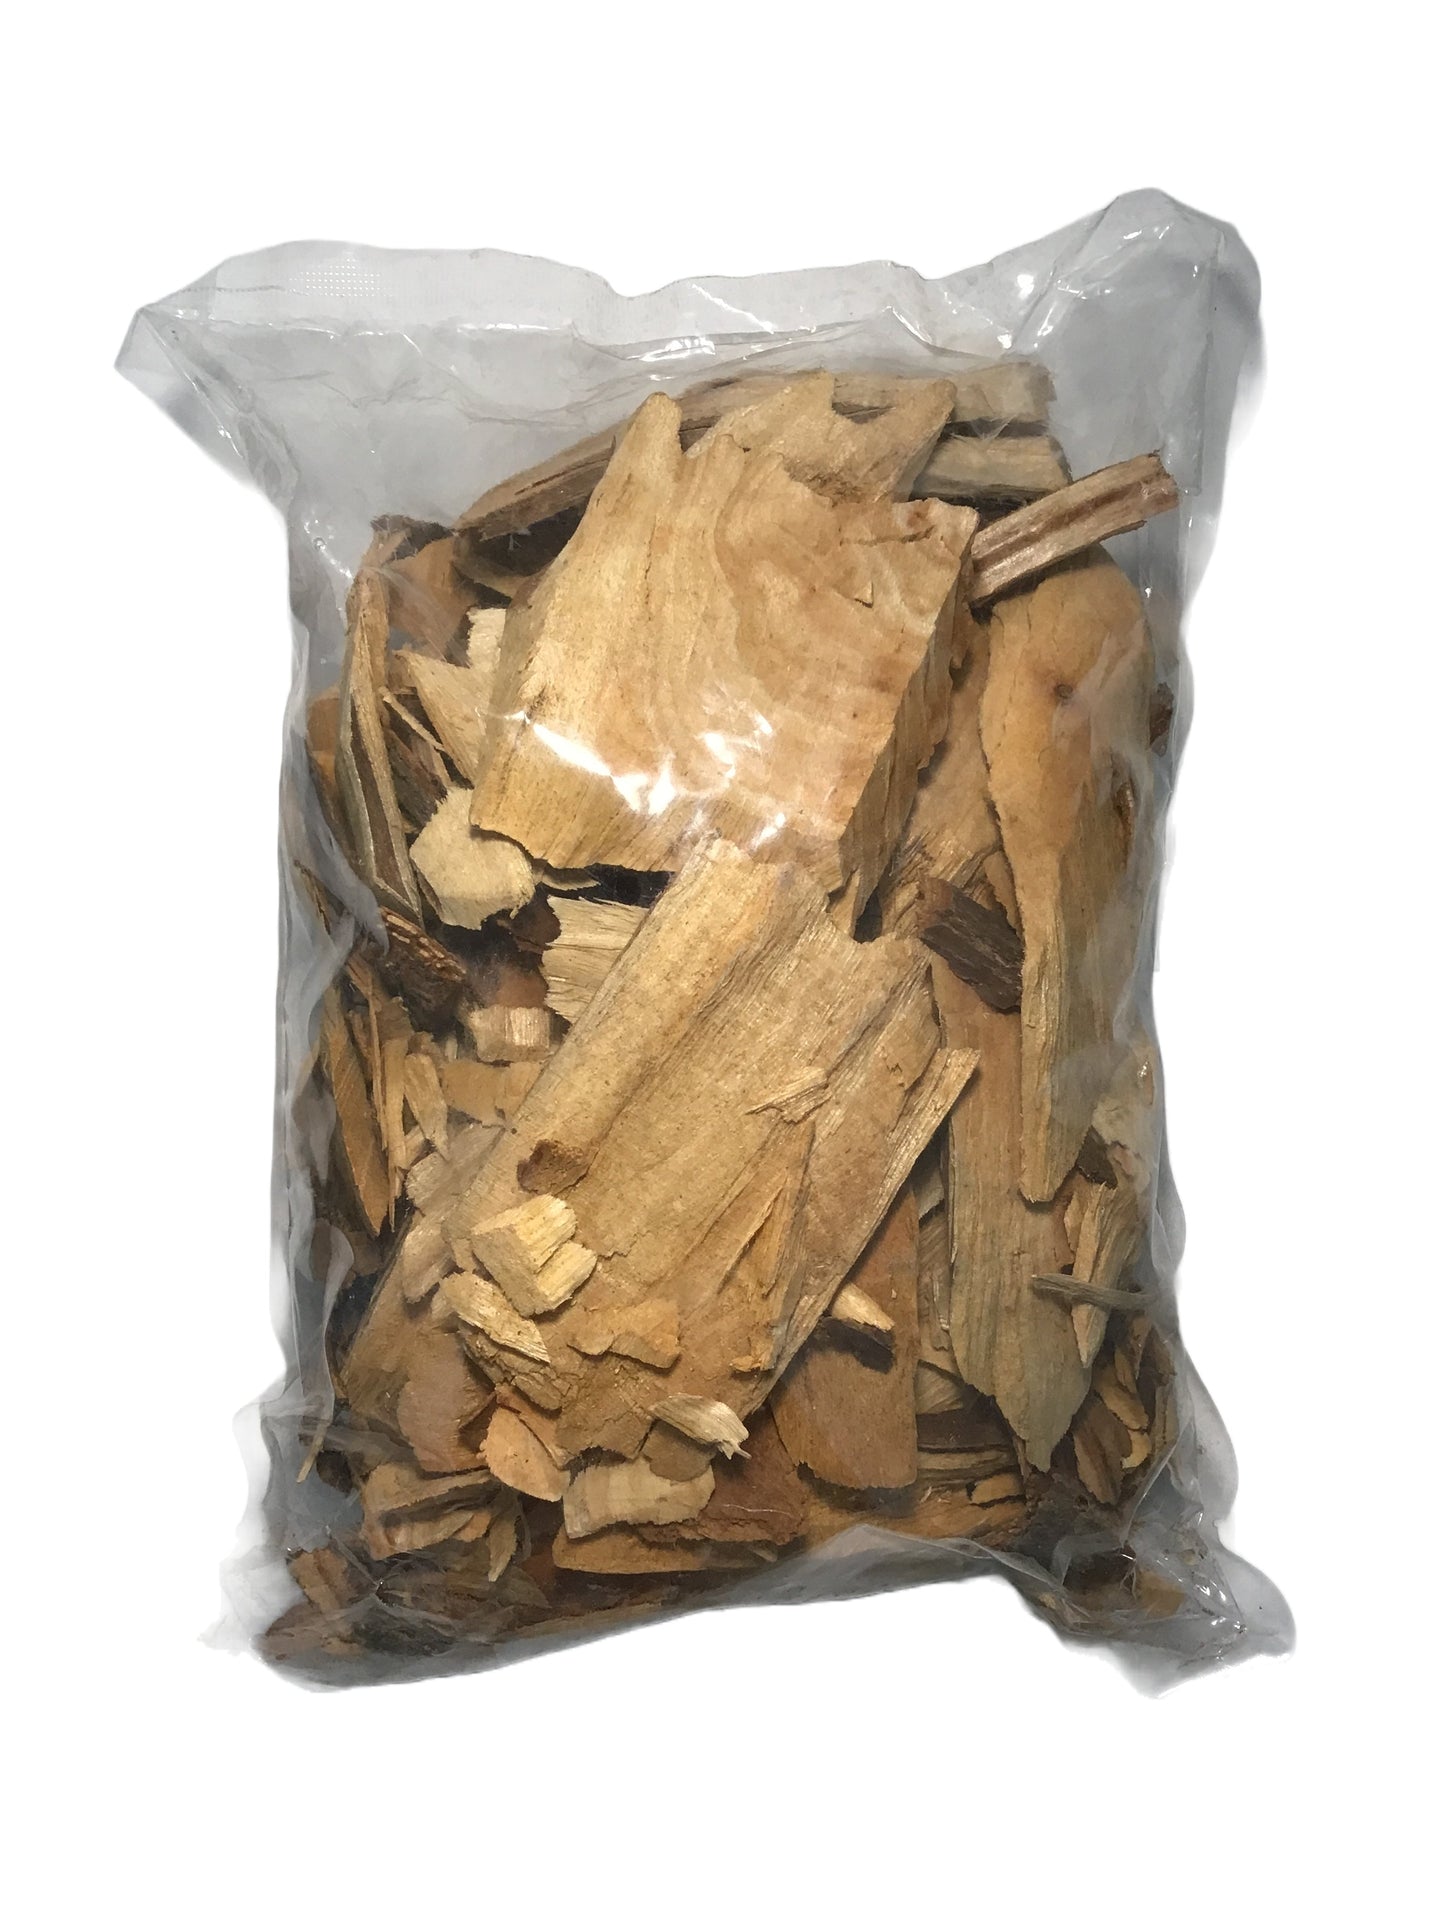 Camphorwood (Cinnamomum Camphora) - 樟木片 (zhāng mù piàn)